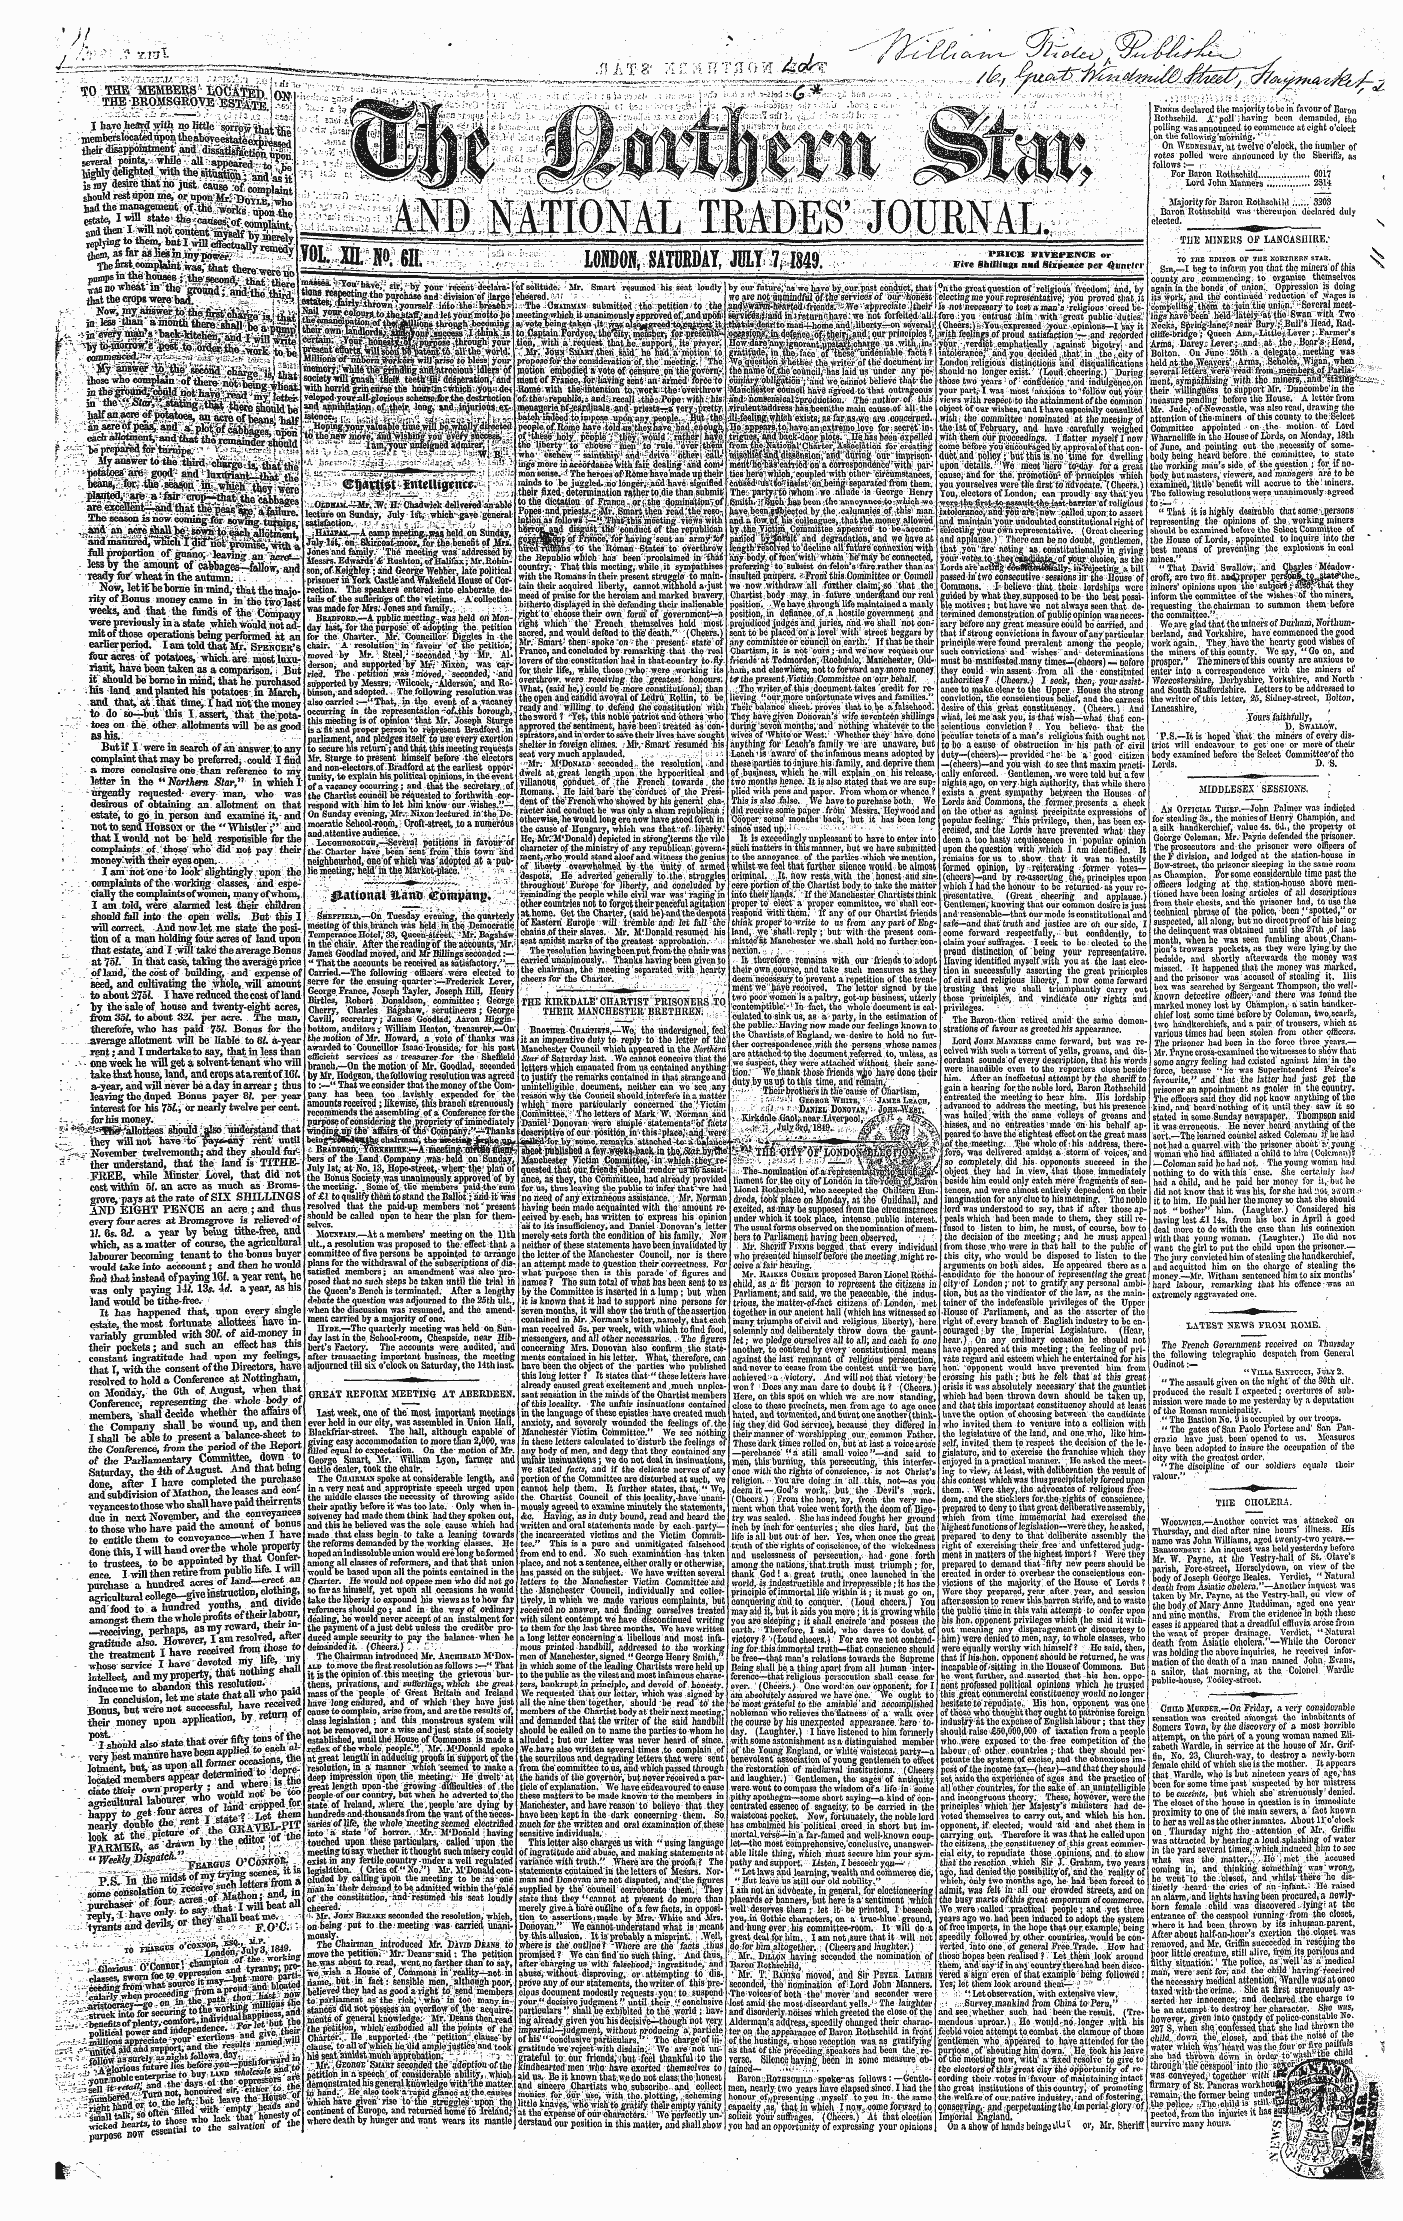 Northern Star (1837-1852): jS F Y, 3rd edition - ' ., - . Rhe Rirkdale' Chartist : Prisbn...